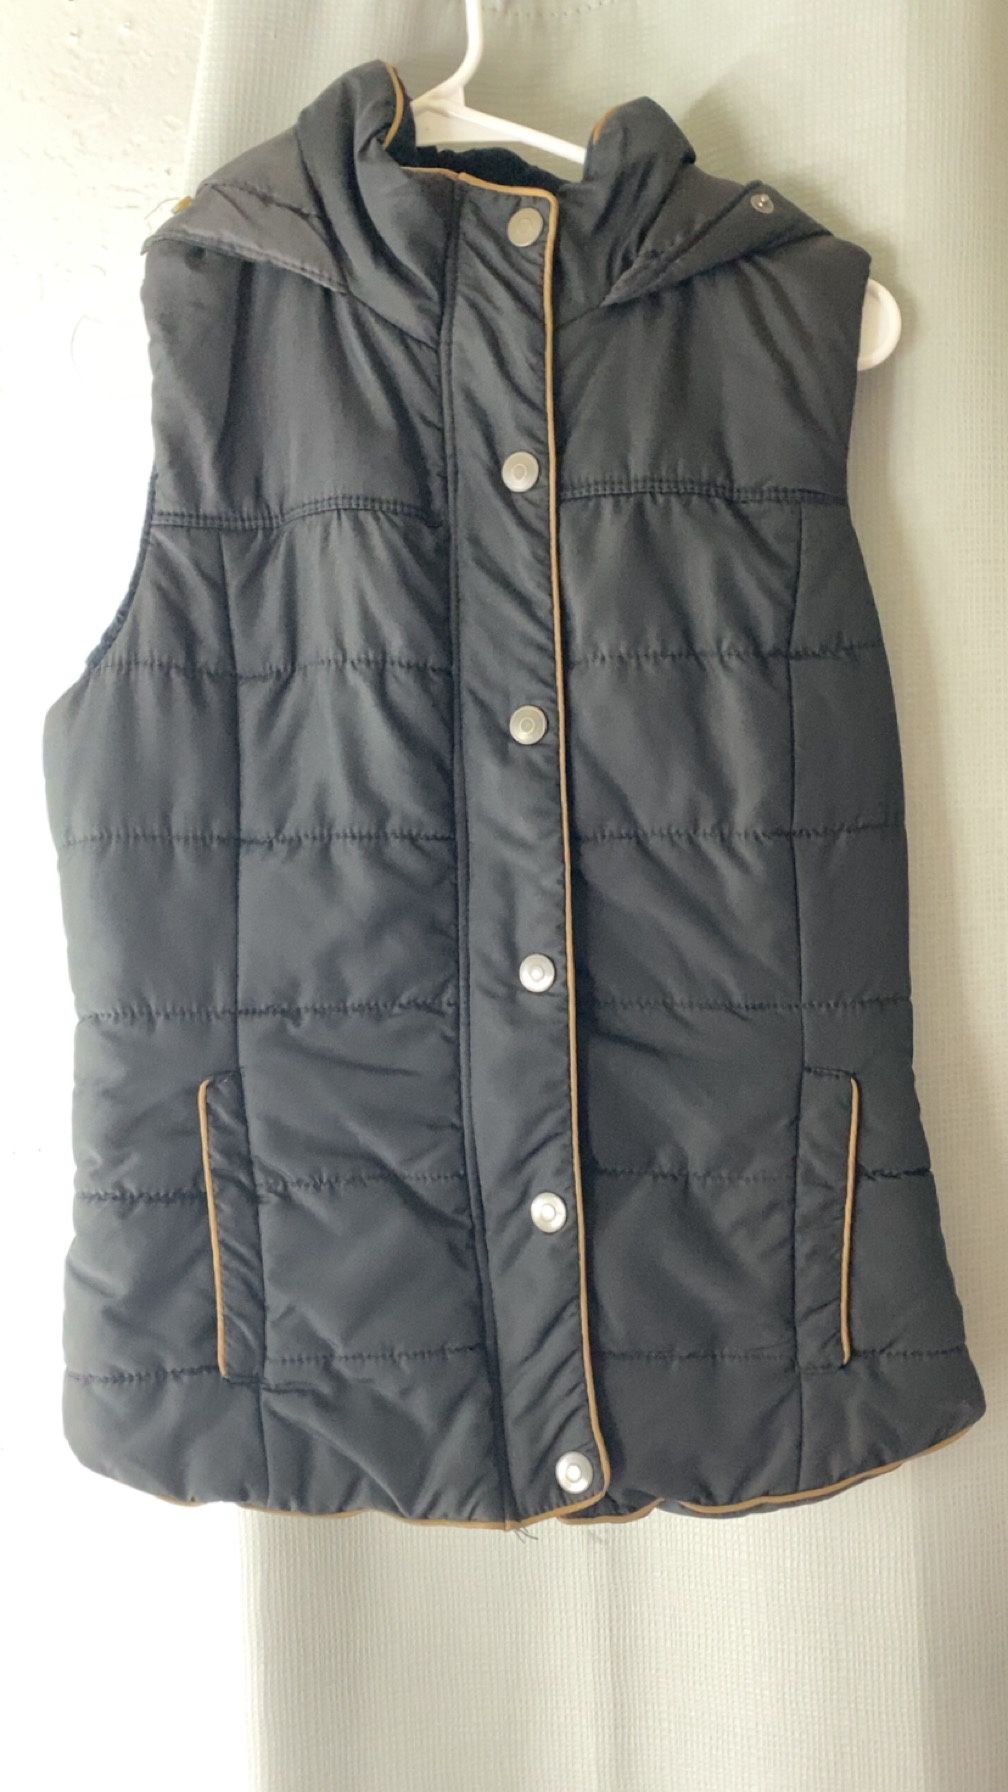 black puffer vest size medium 